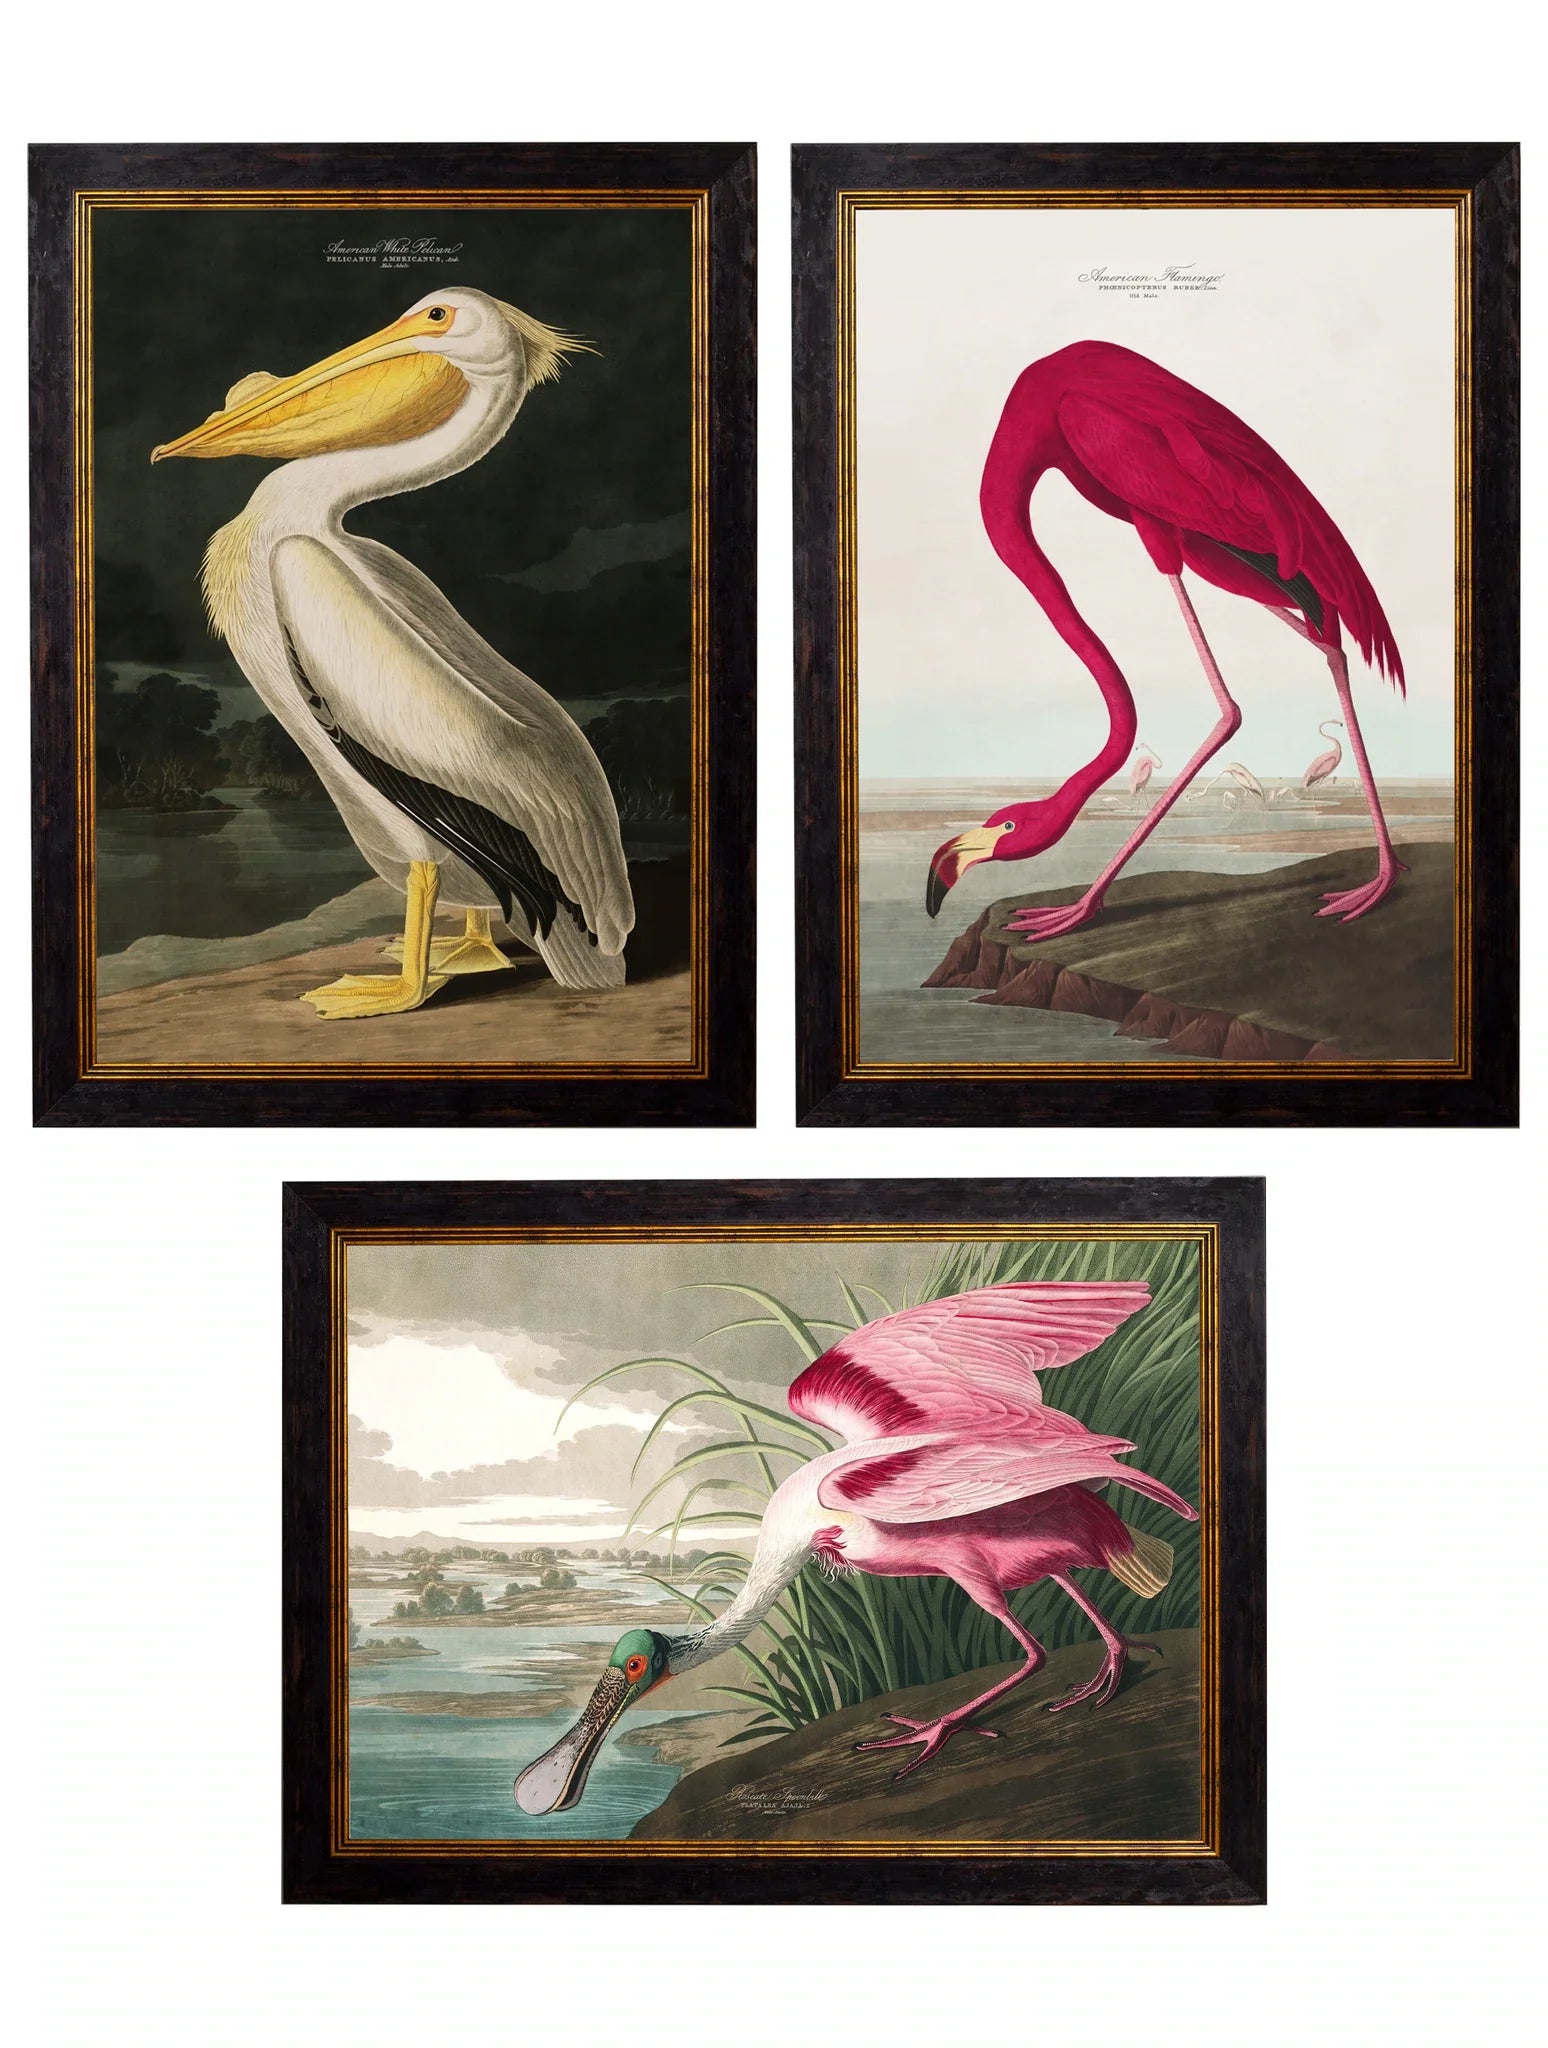 C.1838 Audubon's Birds of America for sale - Woodcock and Cavendish